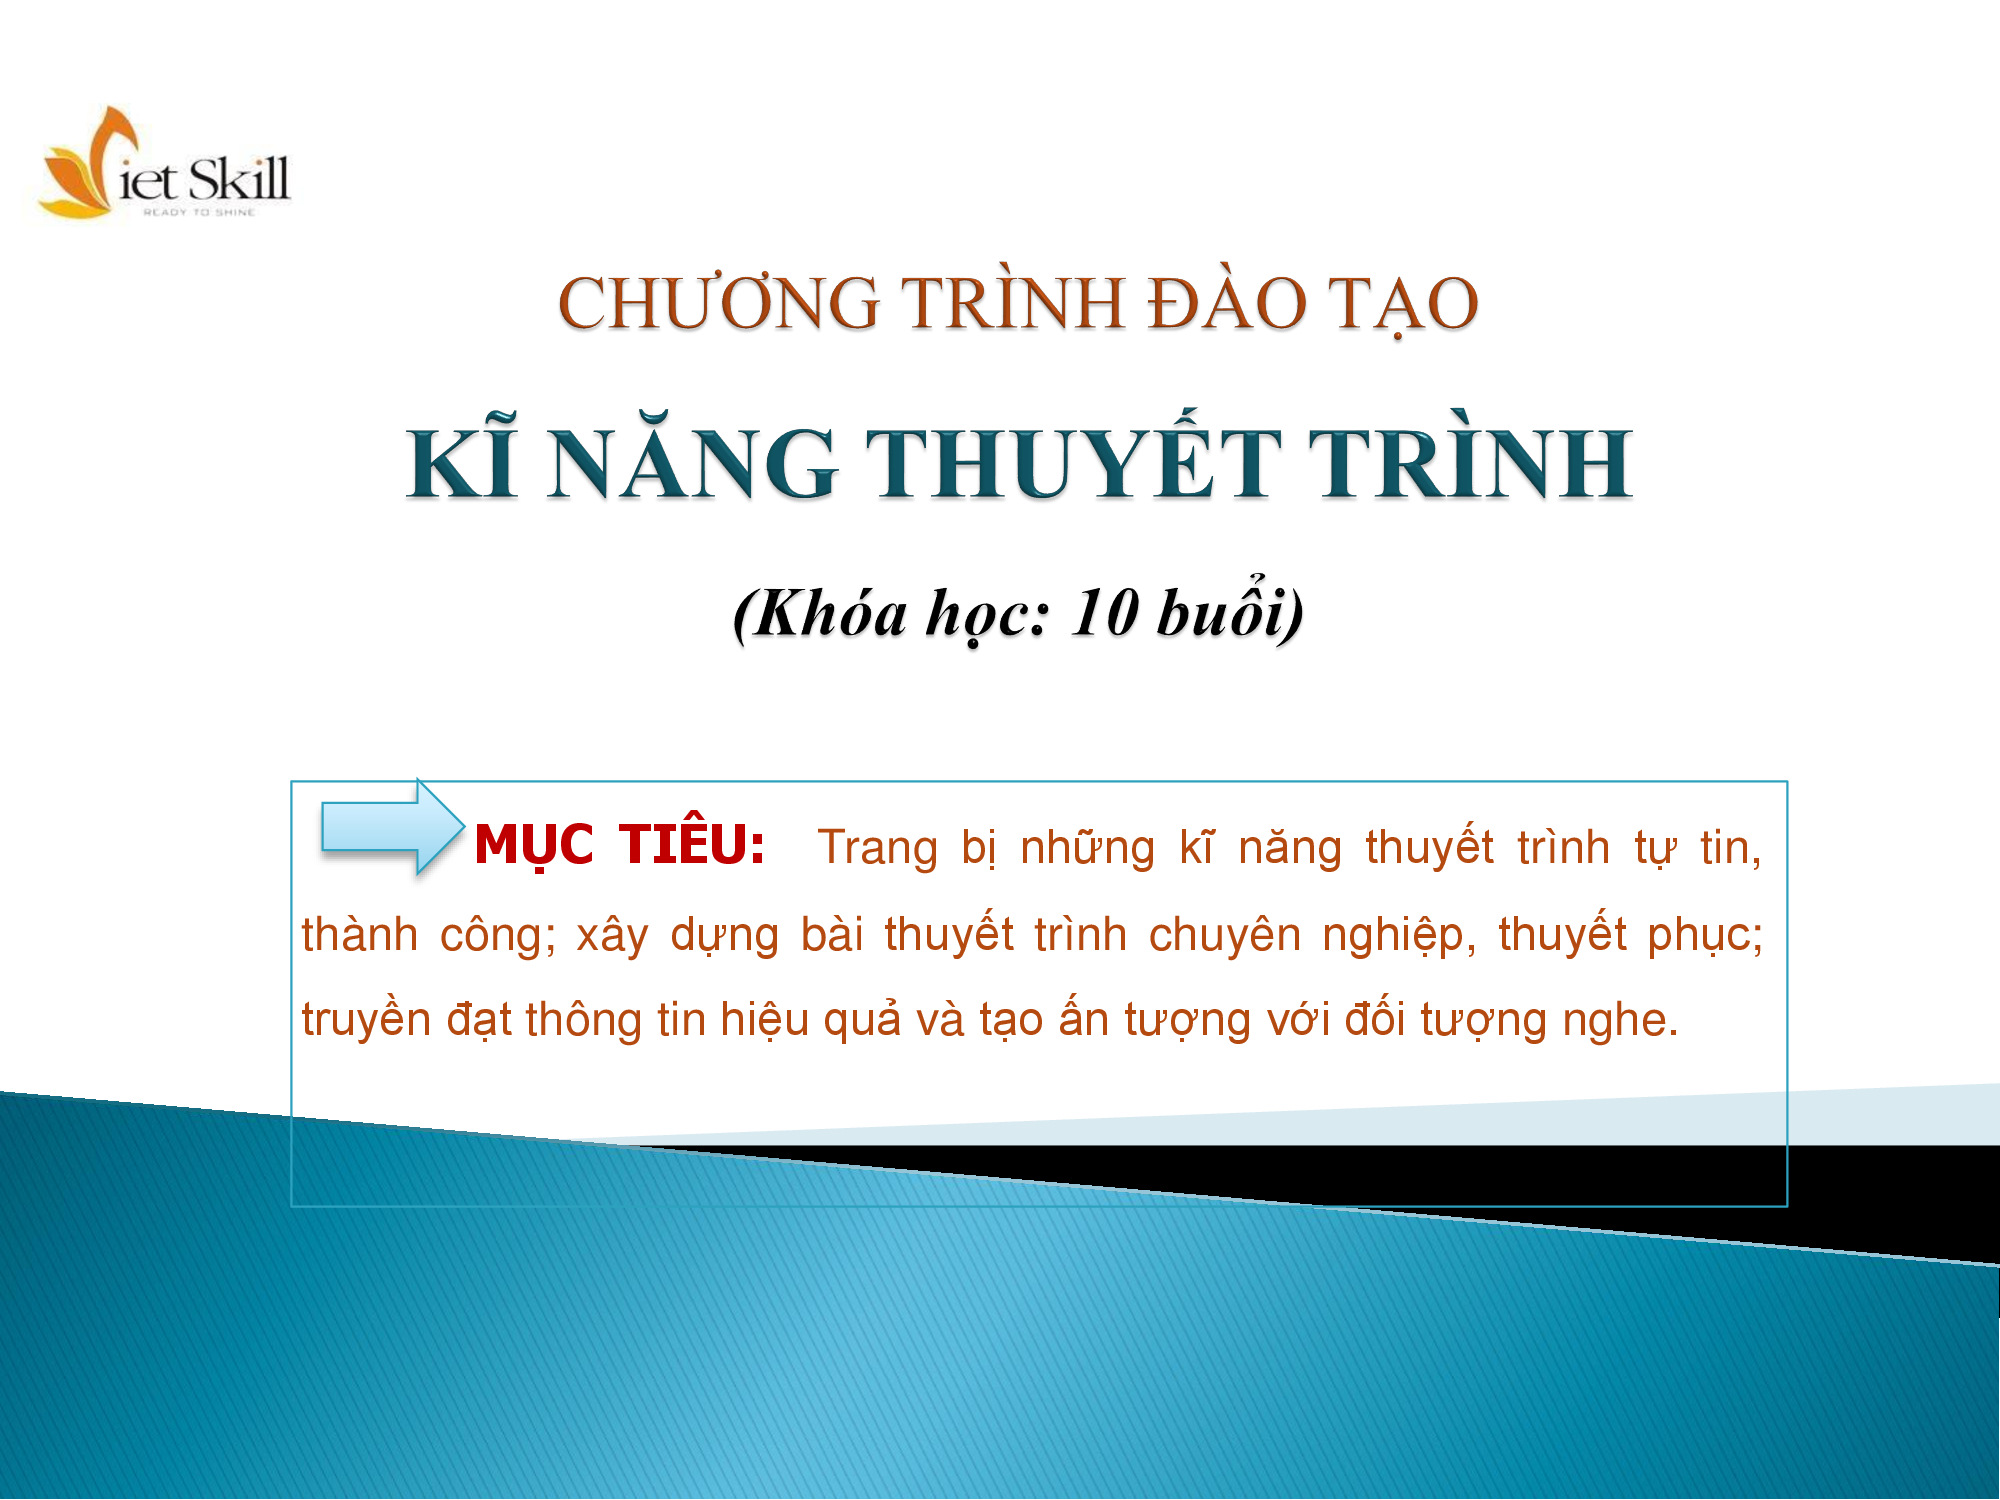 CHUONG-TRINH-DAO-TAO-KY-NANG-THUYET-TRINH-VIETSKILL-1.jpg